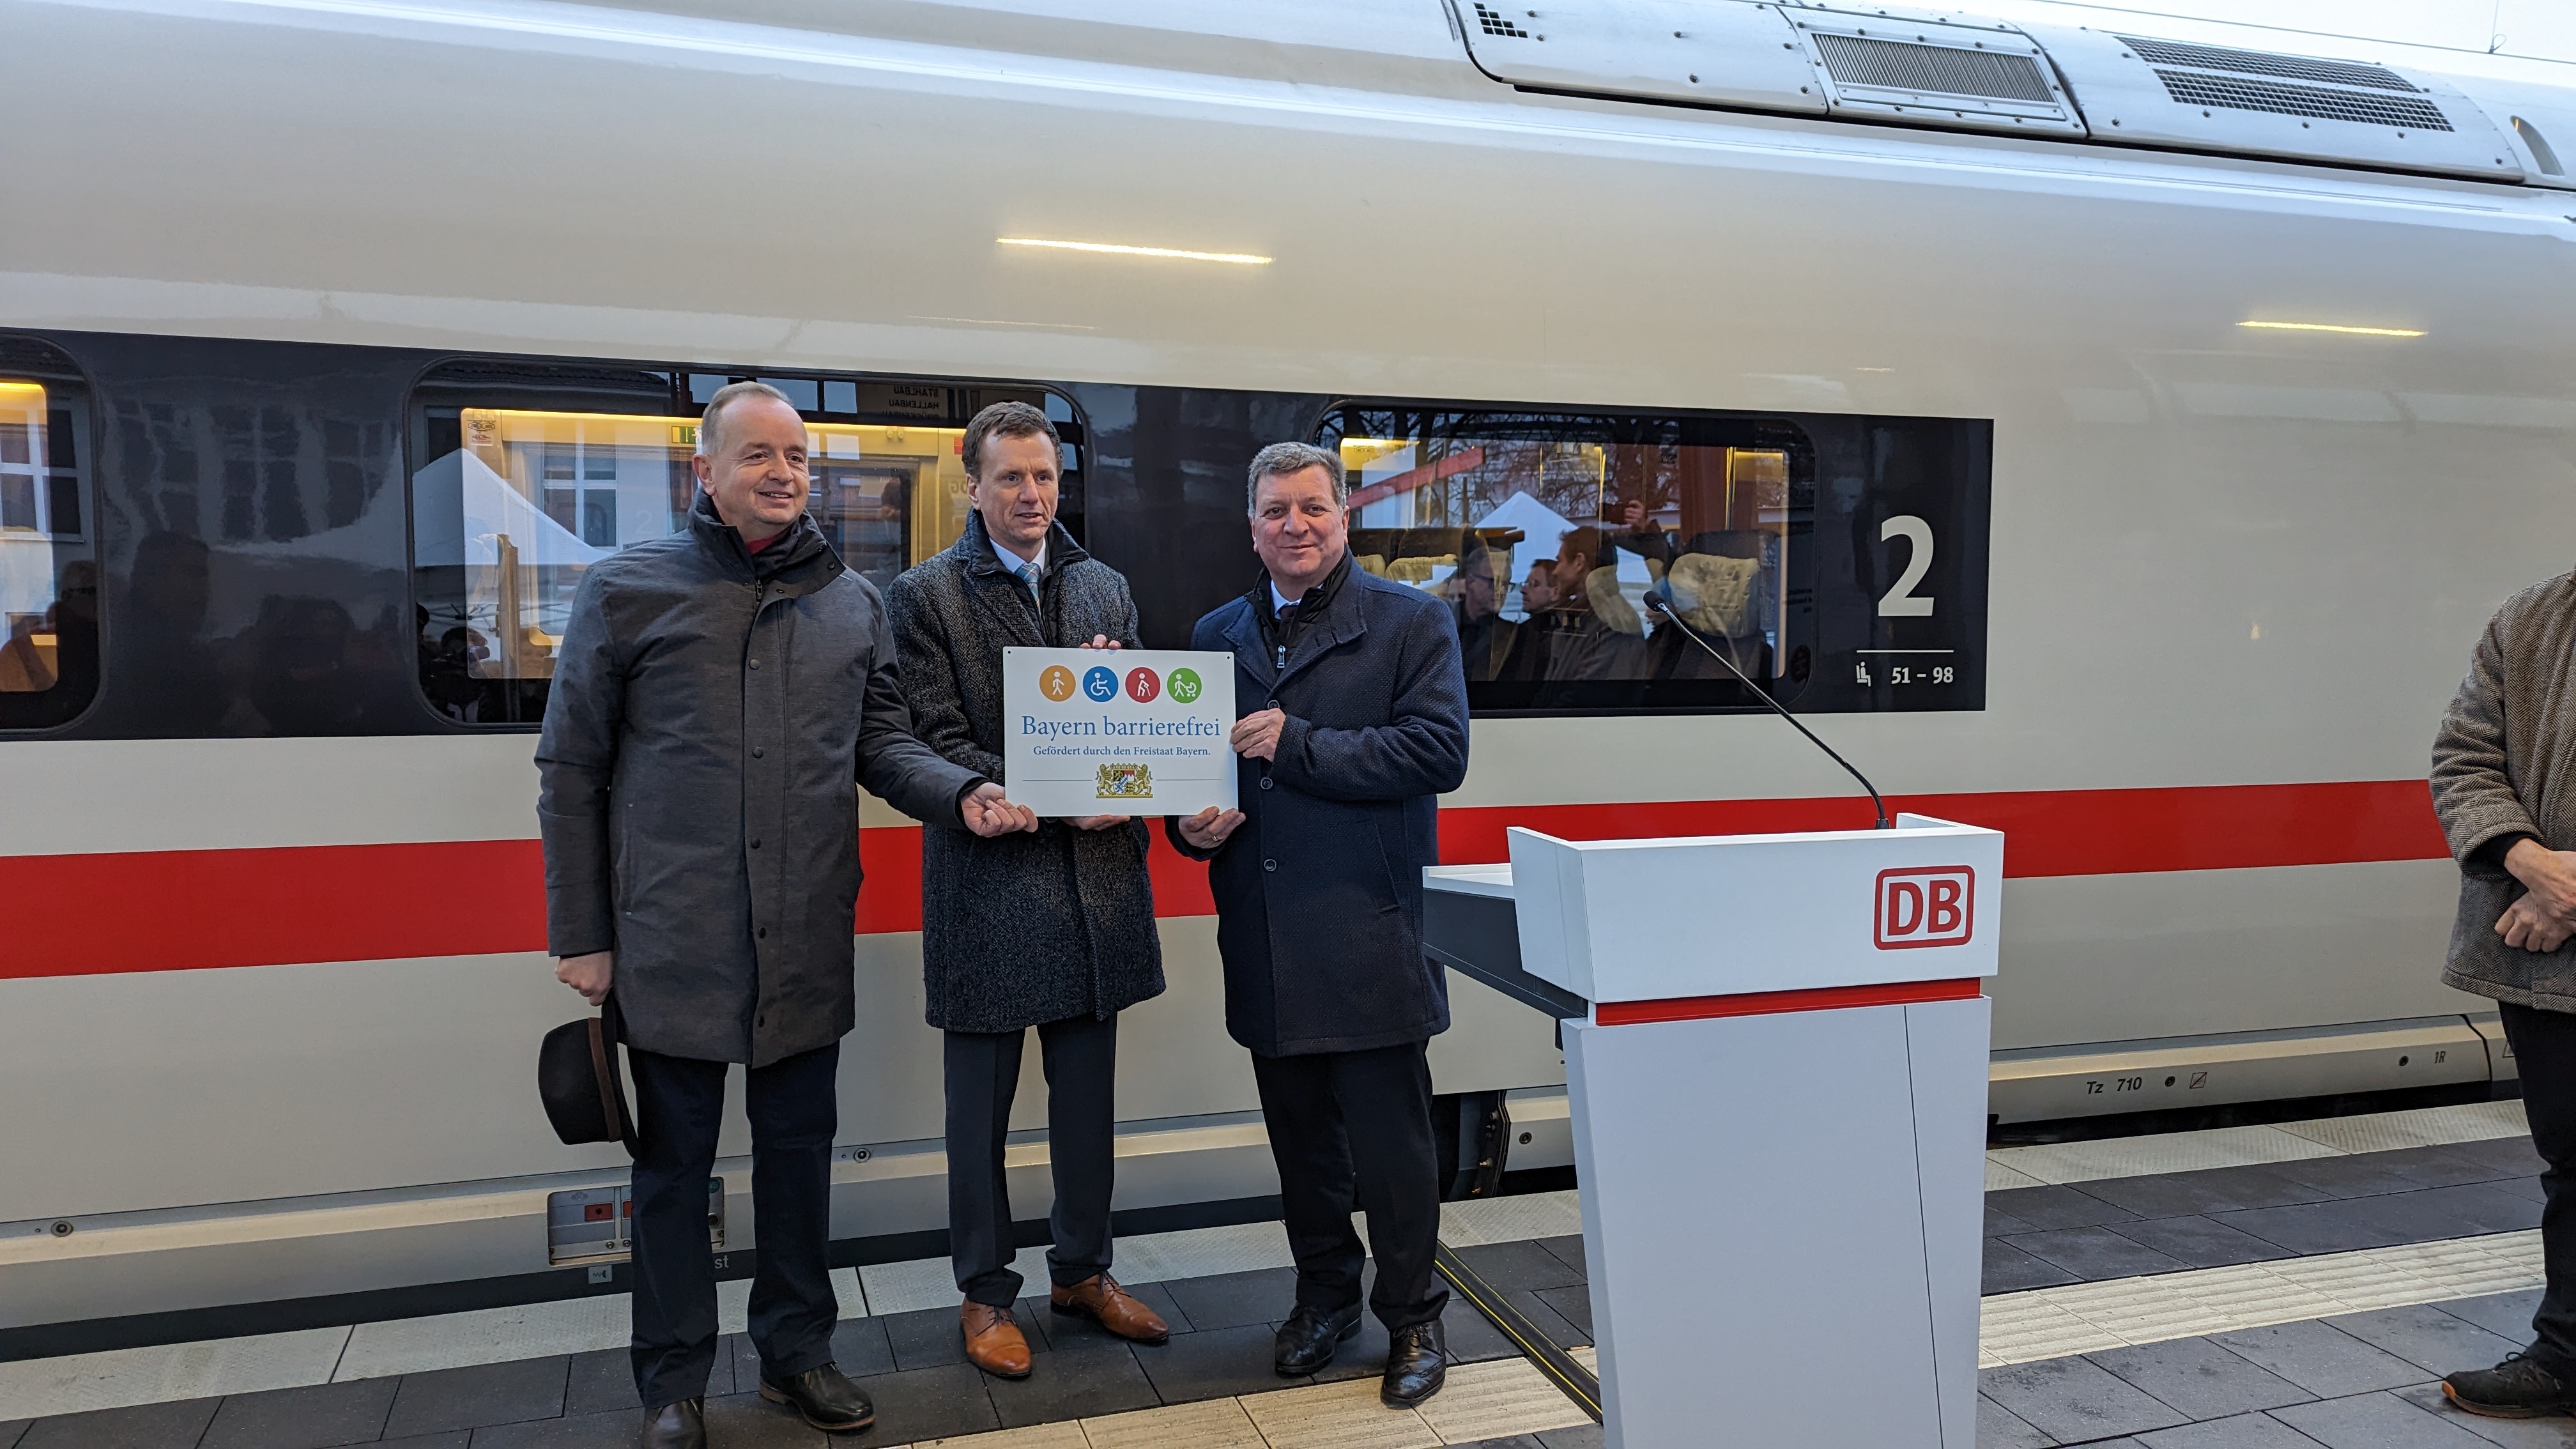 13.20.2022 - Einweihung Bahnhof Ansbach - 5. Dezember 2022 - Frank Stöckert - Abgeordnetenbüro Andreas Schalk